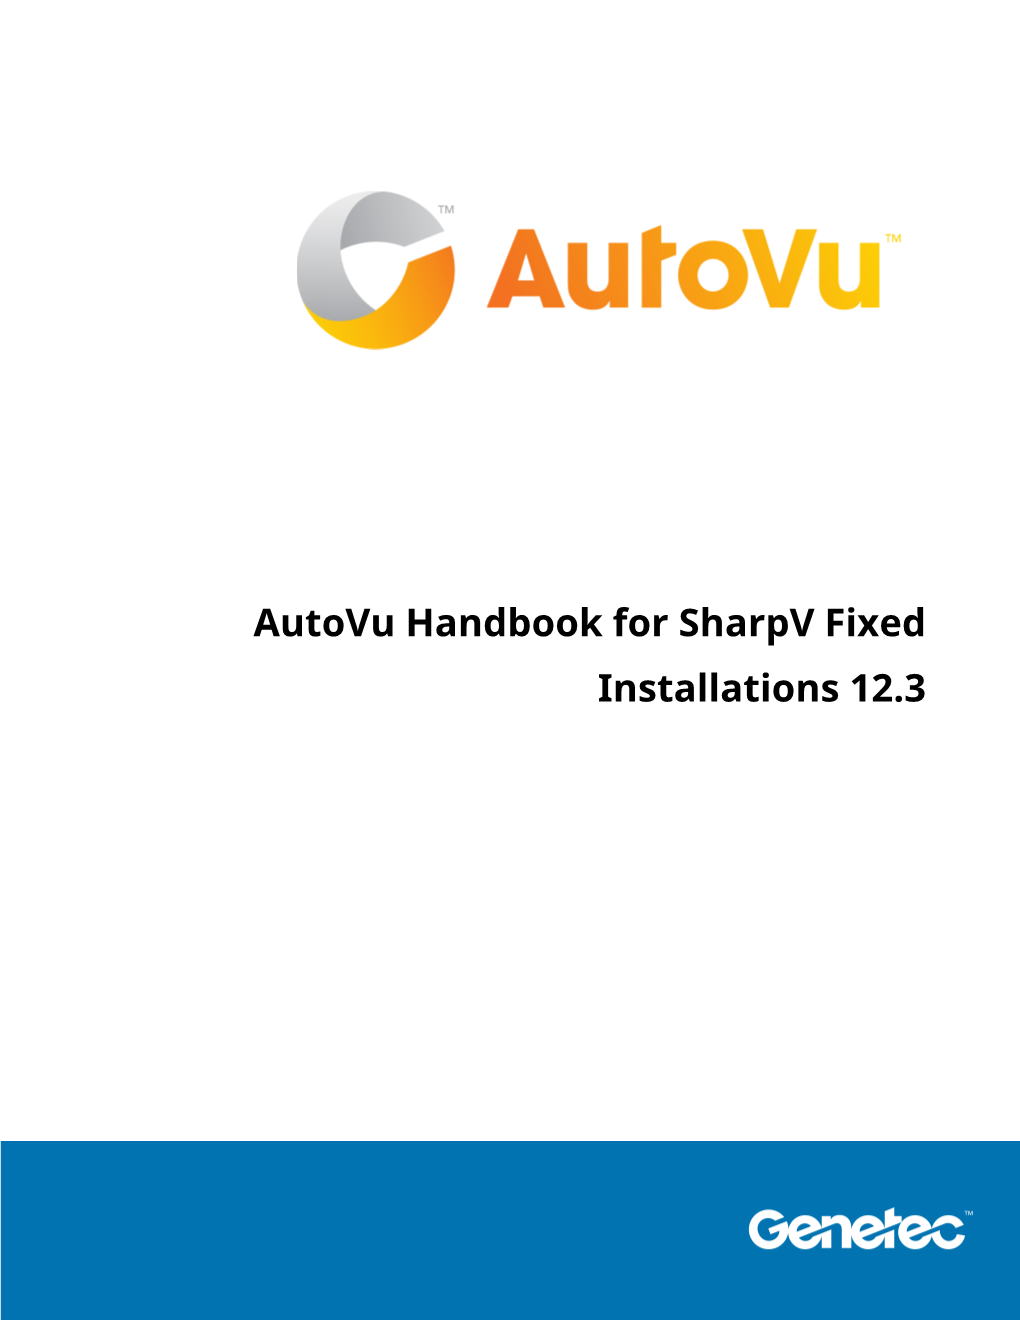 Autovu Handbook for Sharpv Fixed Installations 12.3 Copyright Notice